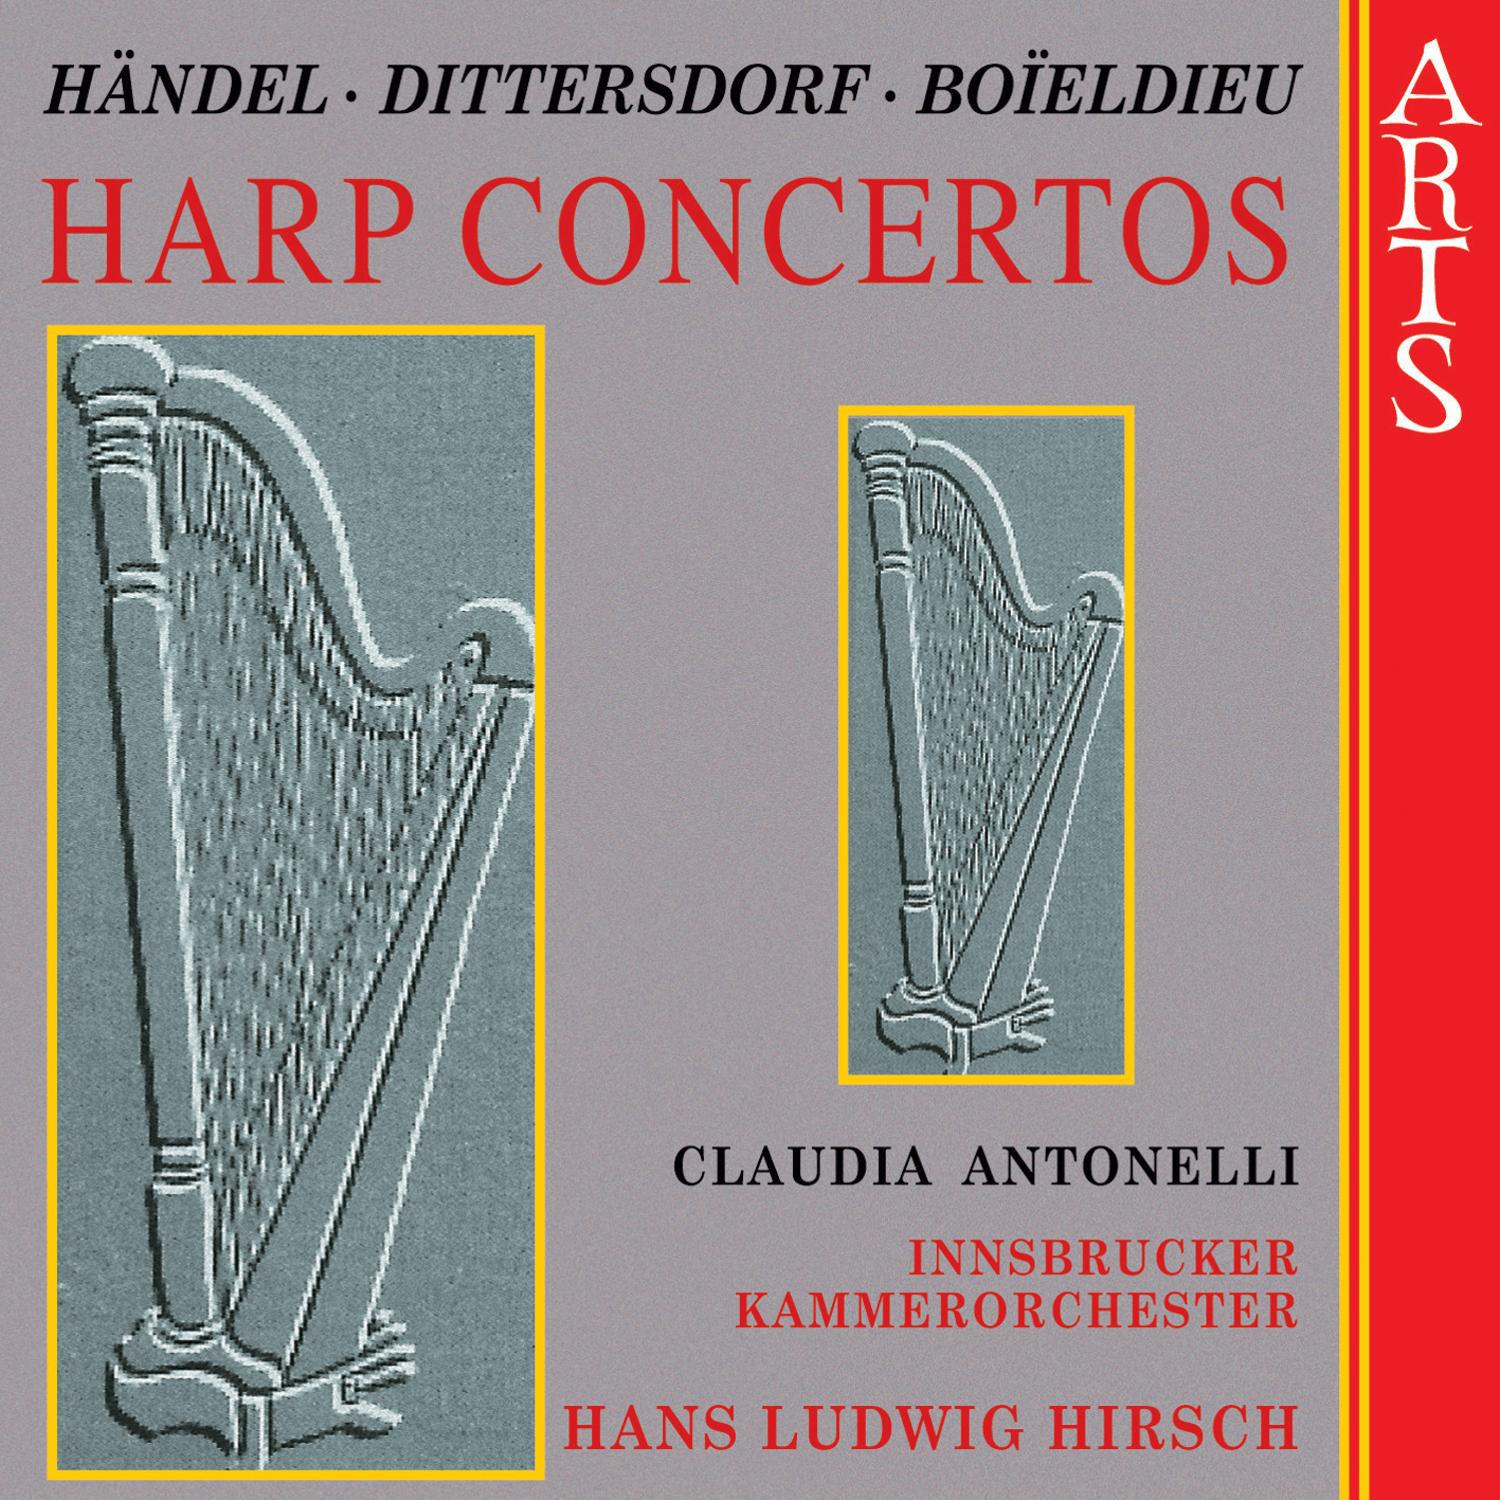 Concerto Op. 4, No. 6 In B Flat Major: Allegro Moderato